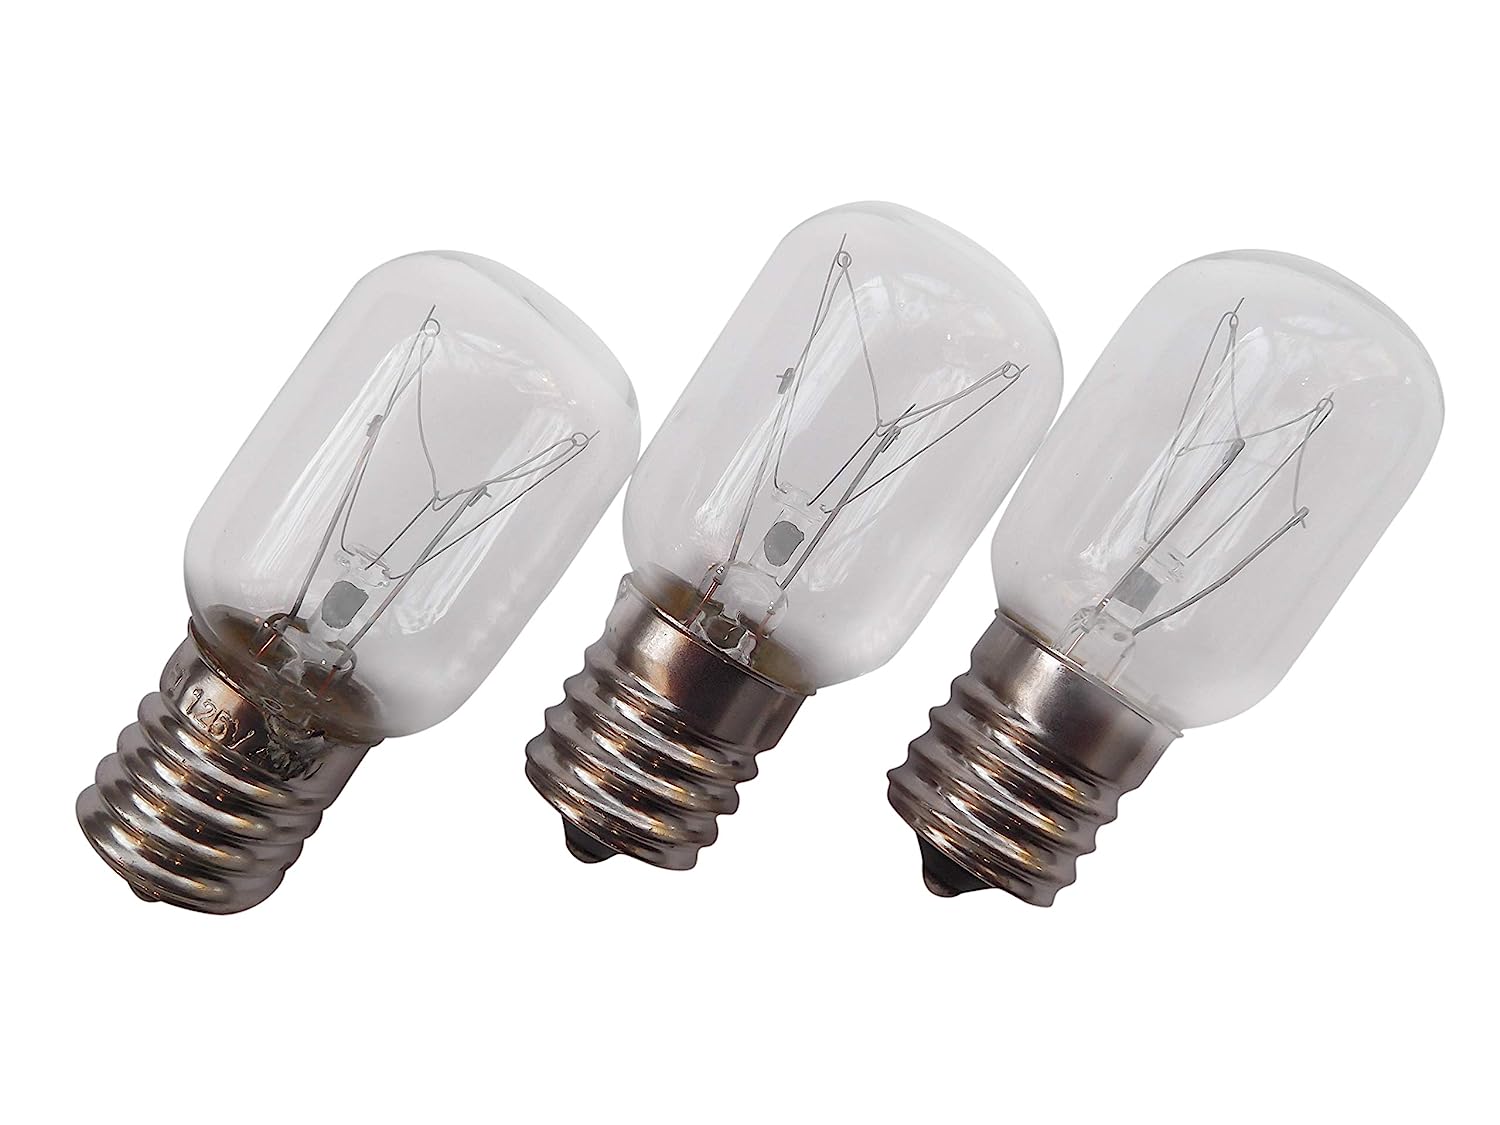 Txdiyifu T8 40W Refrigerator Light Bulb 241552802 297048600 Replacement for Whirlpool KitchenAid Electrolx Kenmore Frigidaire Light Bulb.